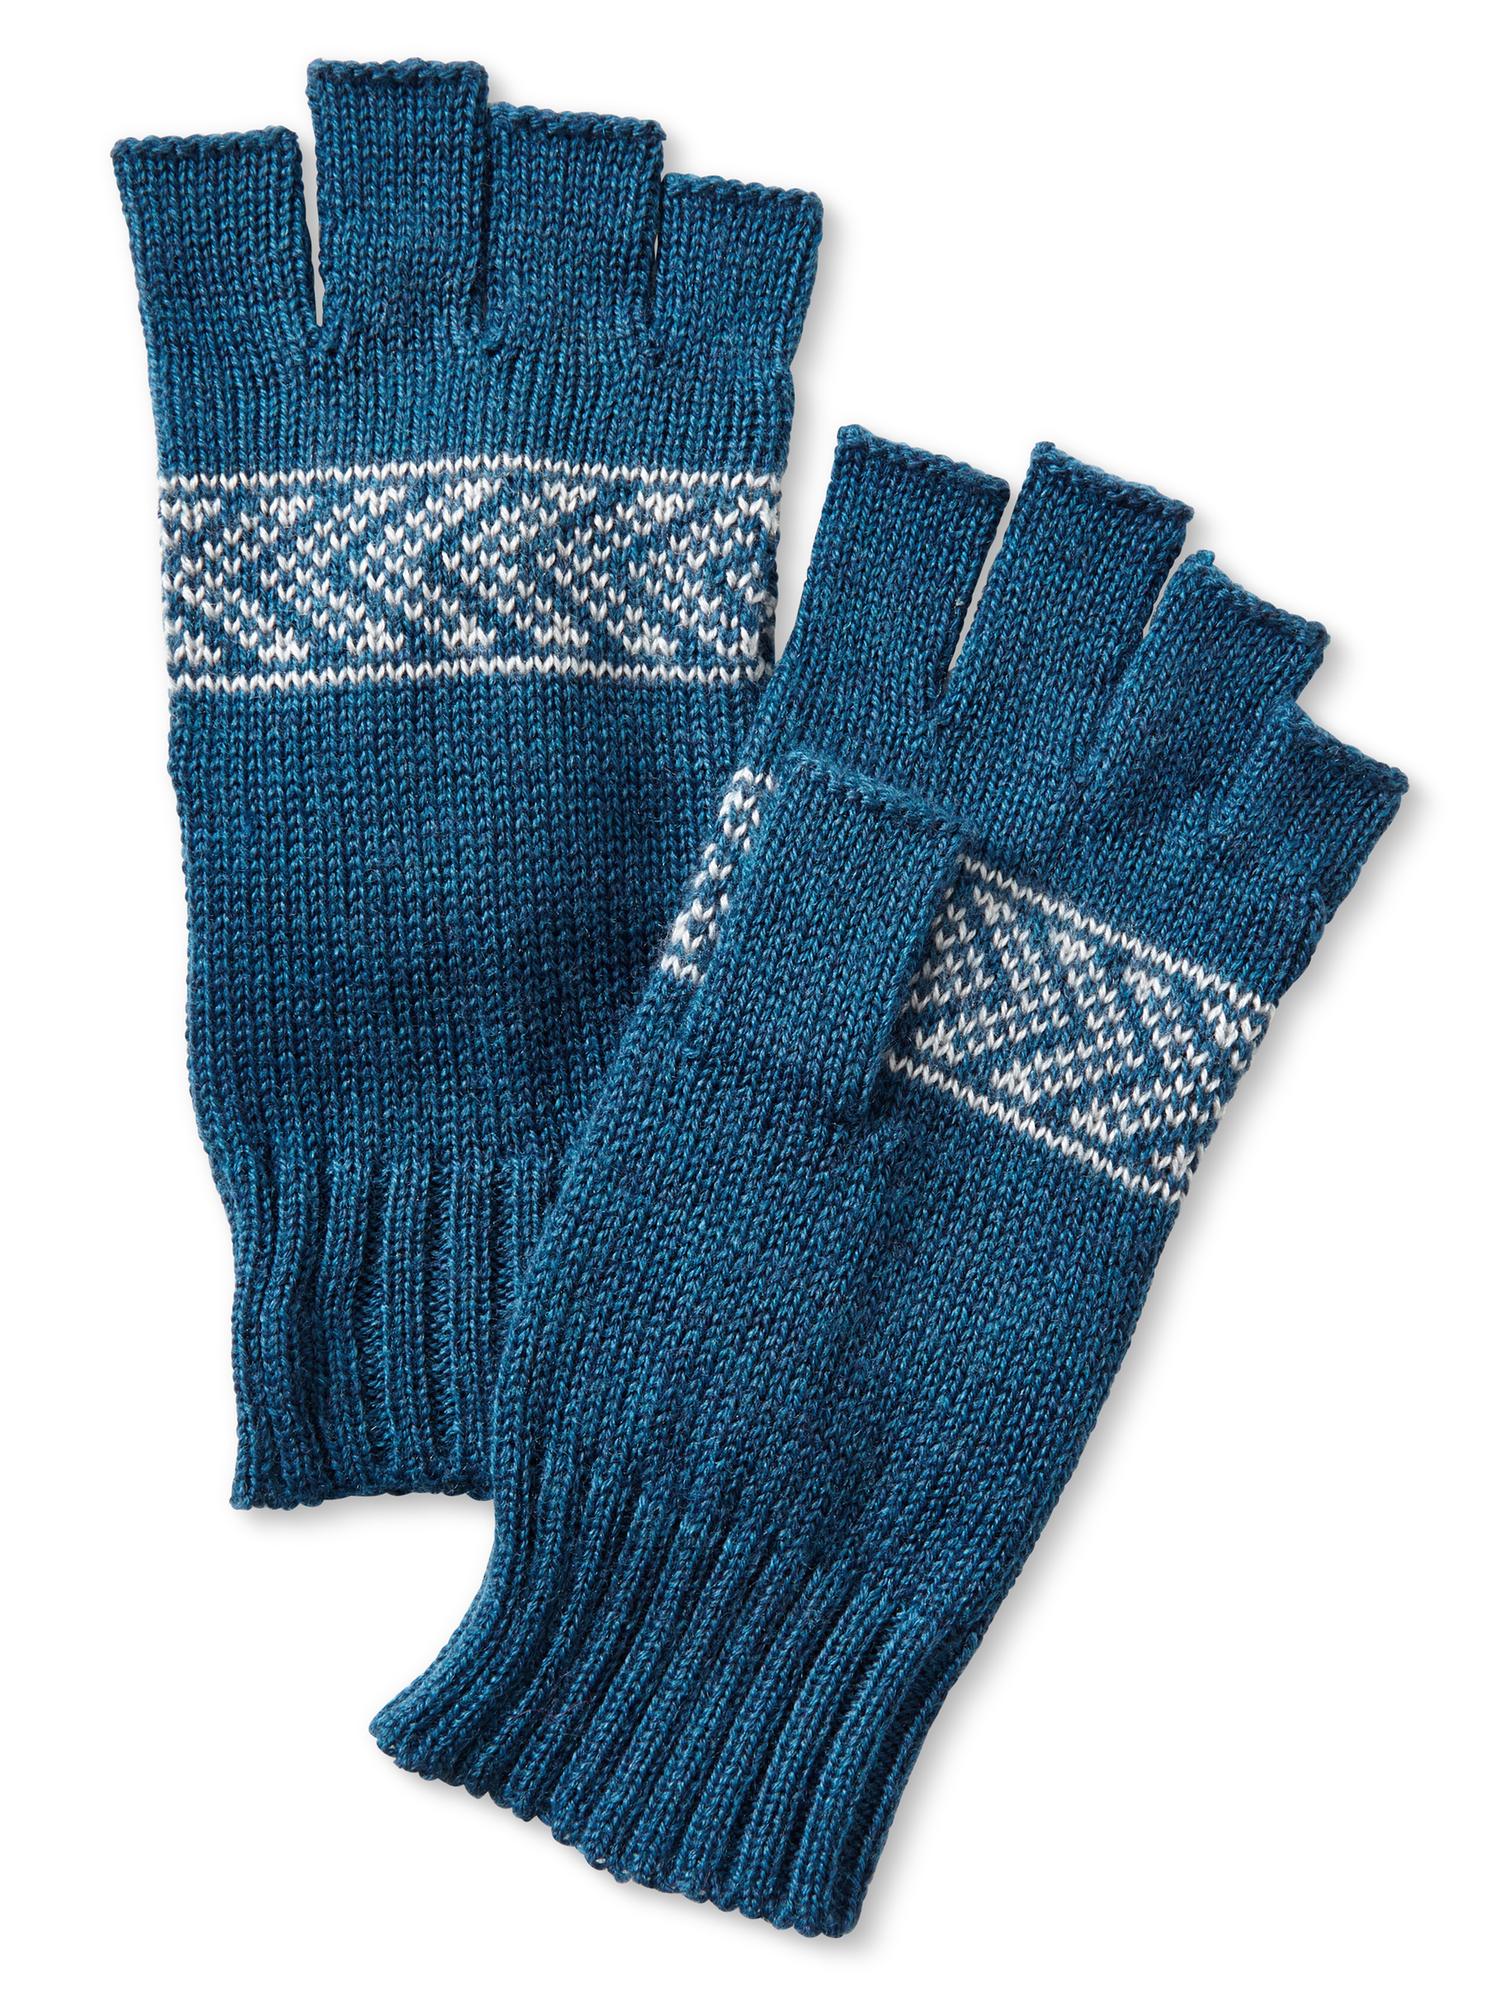 Sweater-Knit Fingerless Glove